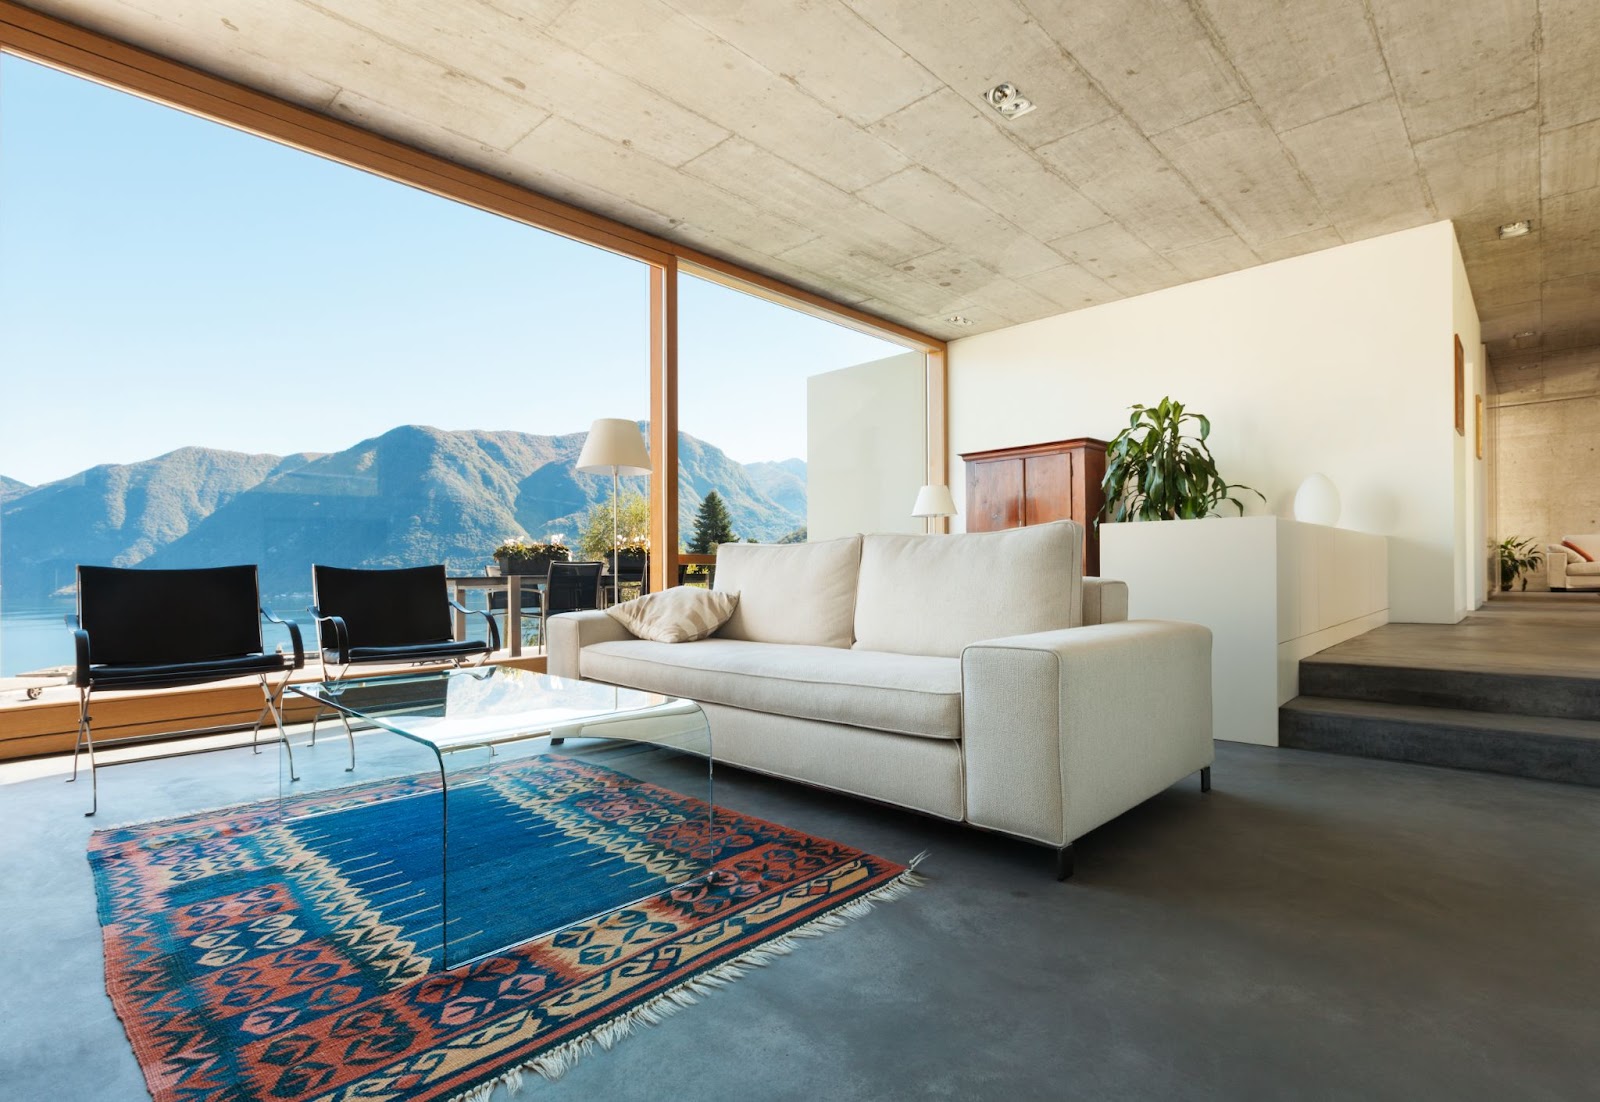 Creative Design Ideas For Decorating & Enhancing Your Concrete Floor